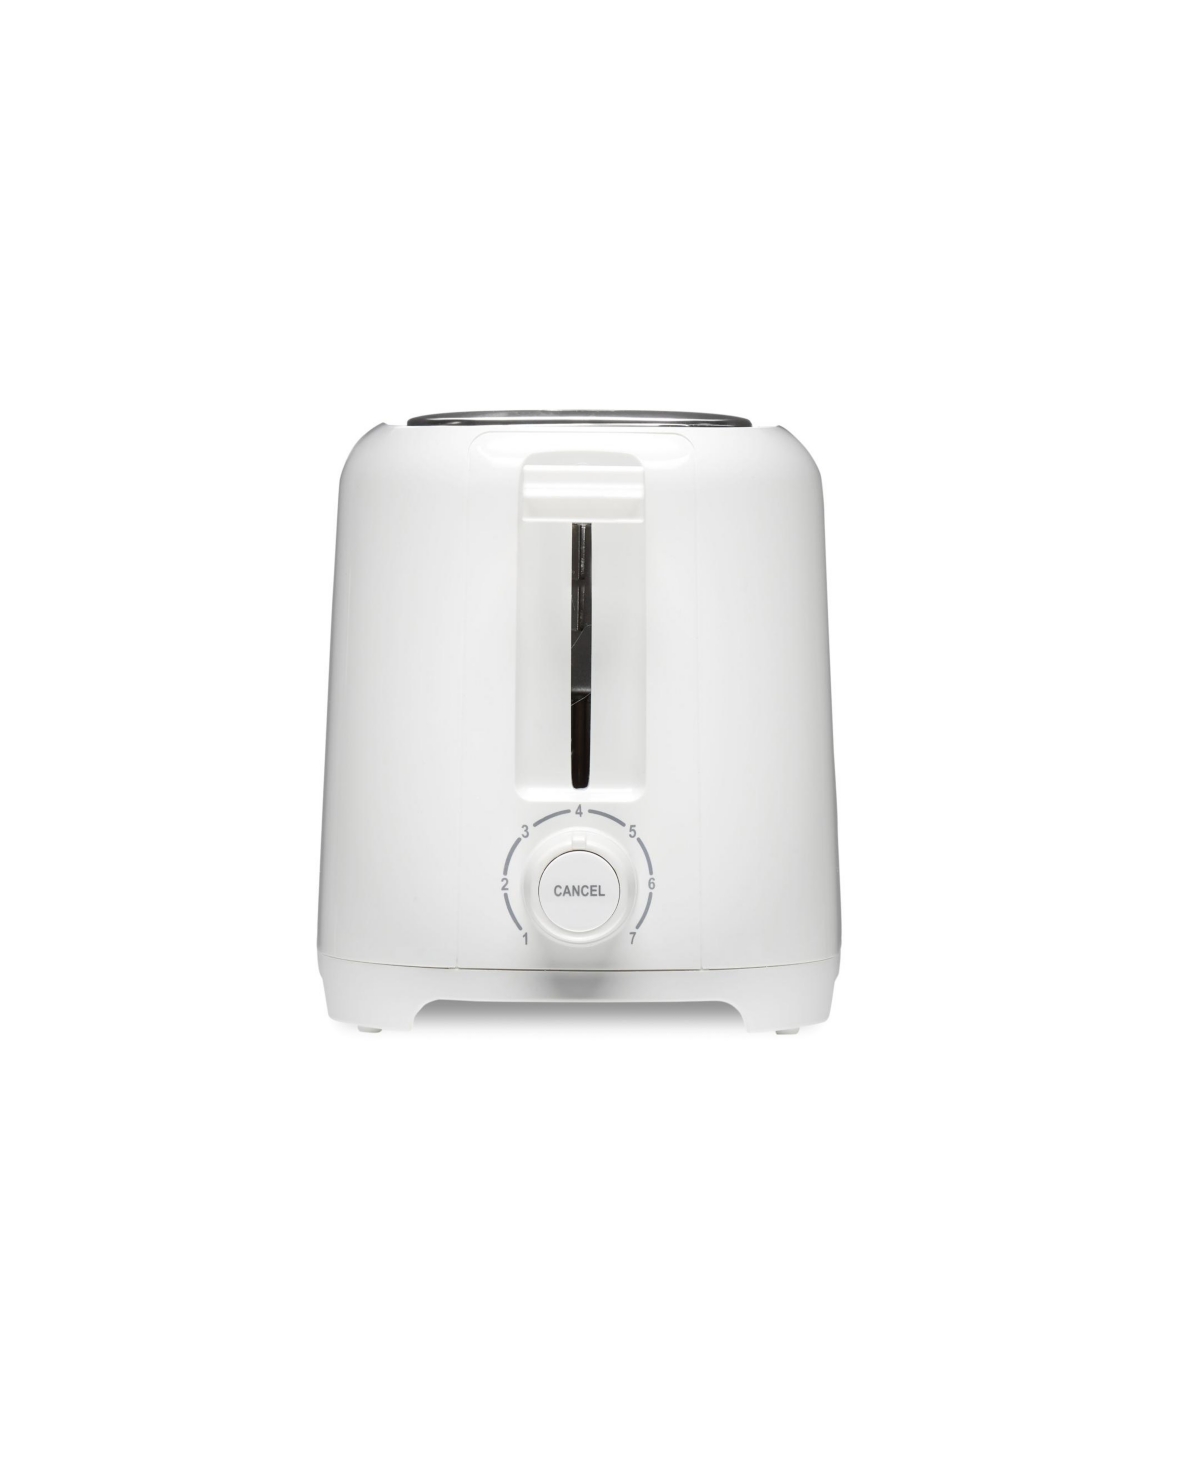 Proctor Silex Wide-slot 2 Slice Toaster In White